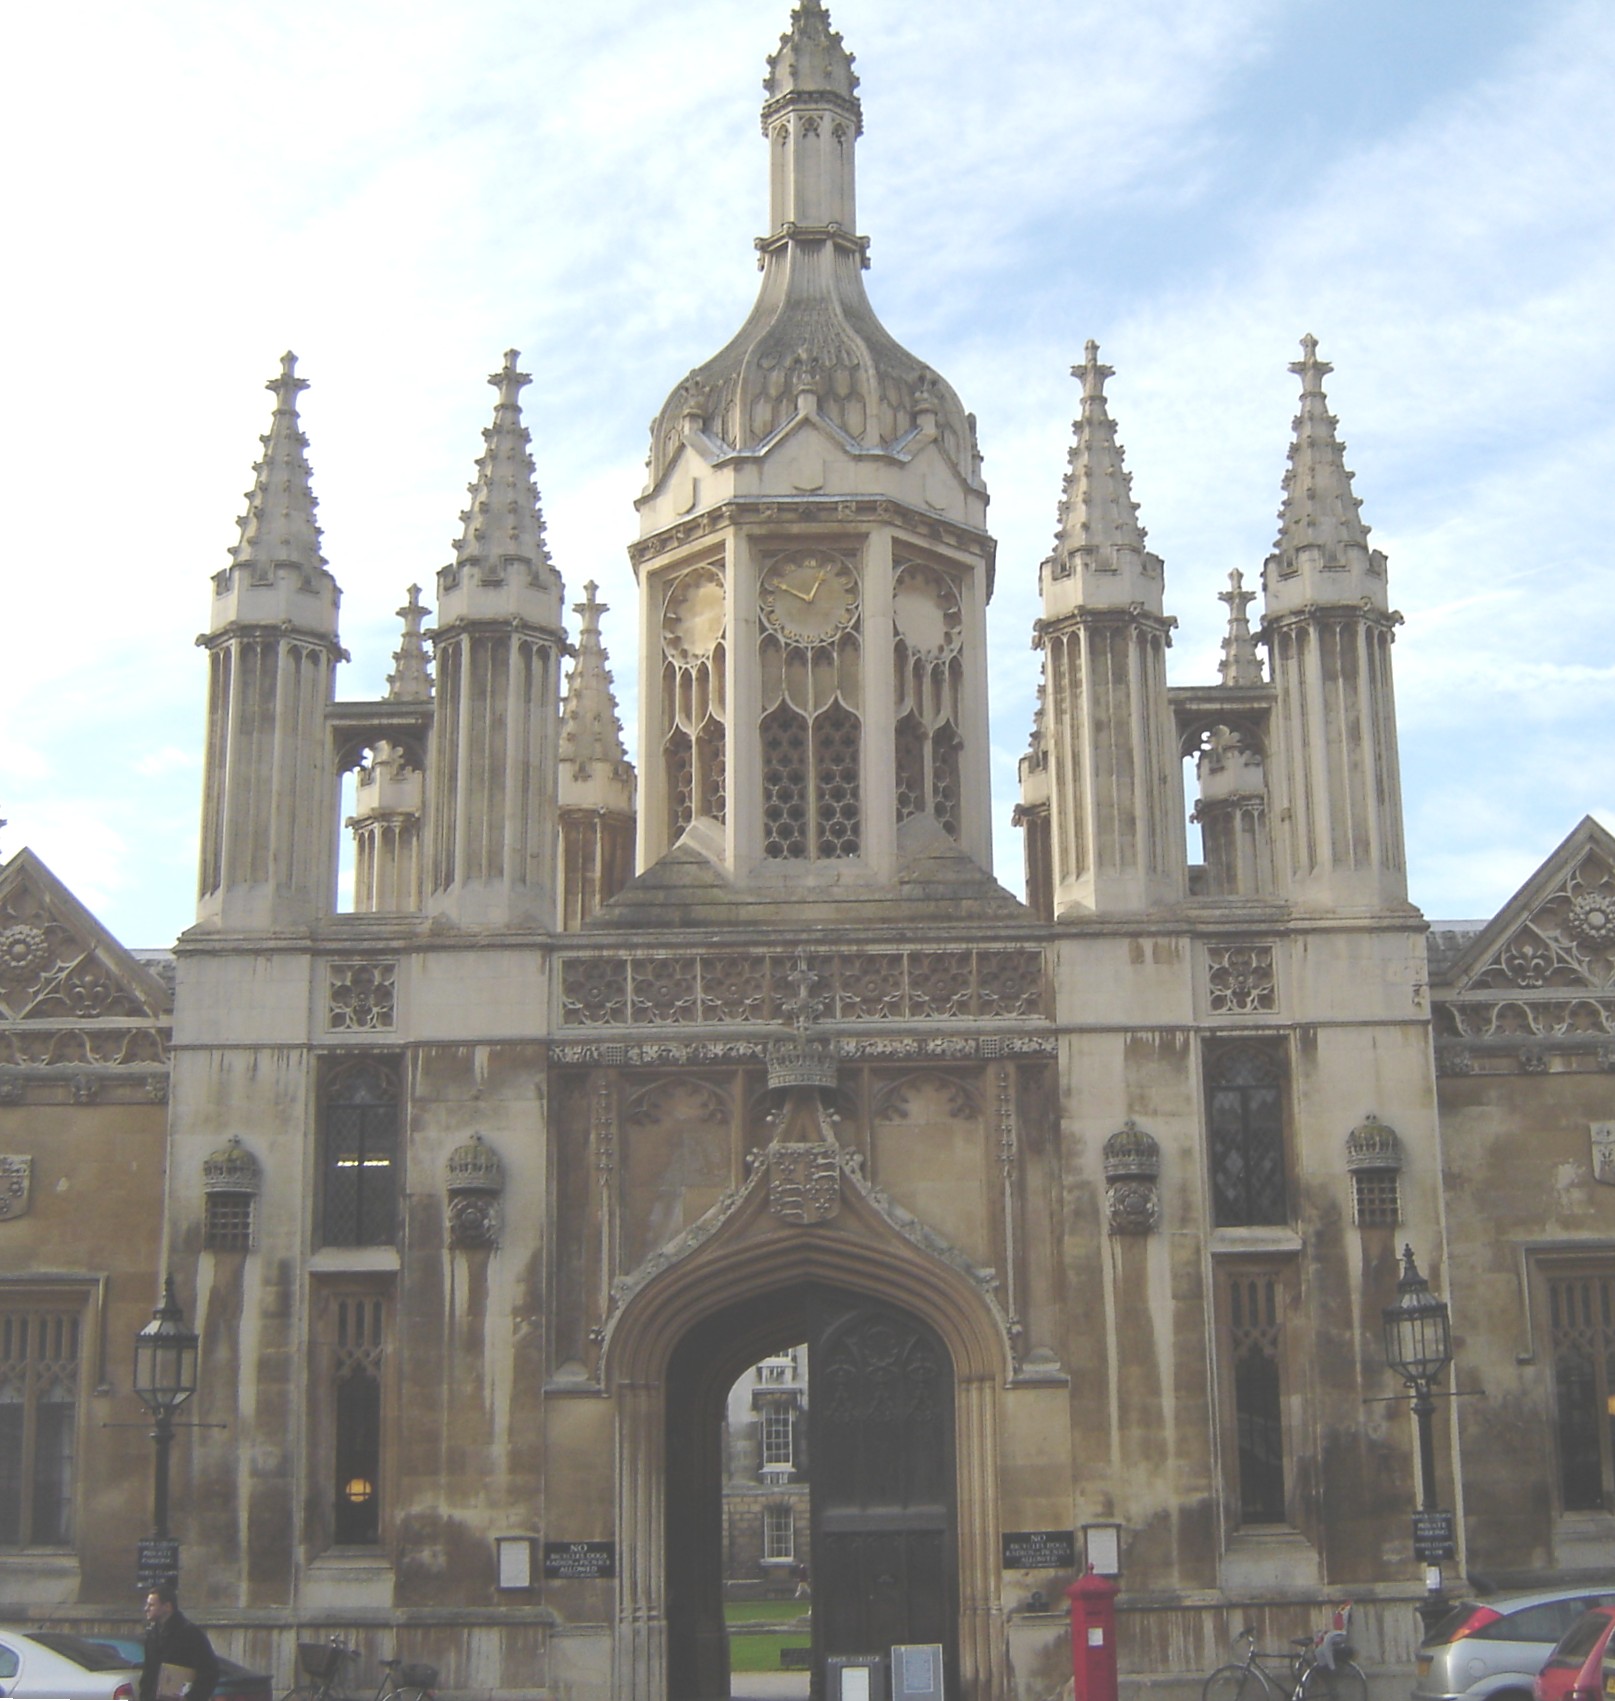 An Entrance to Kings College Cambridge